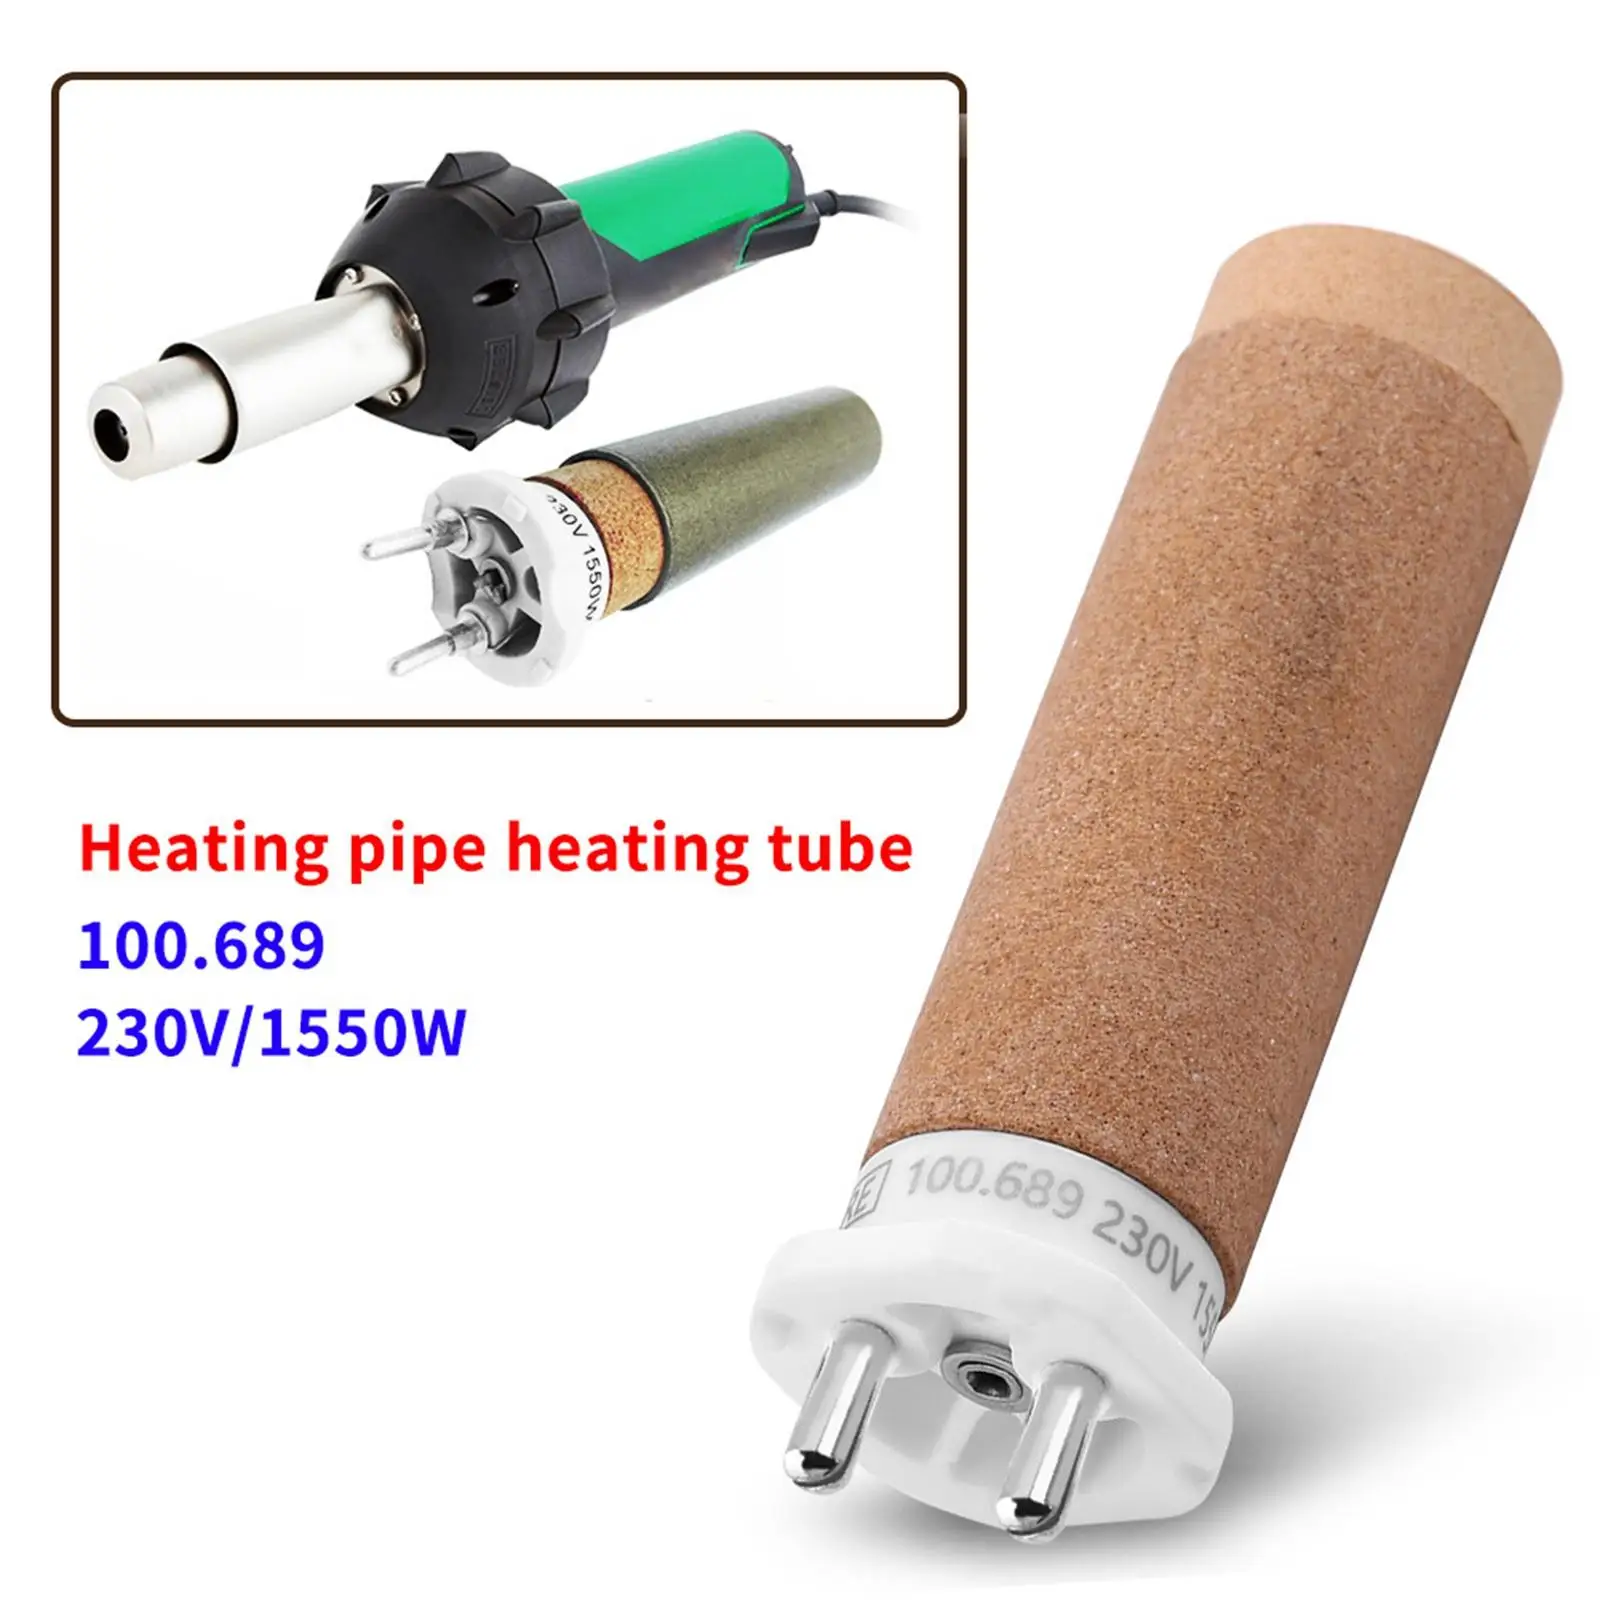 Ceramic Heating Elements 230V 1550W 100.689 Diameter 26mm Heating Core for Handheld Hot Air Plastic Welder Gun Heat Sealing